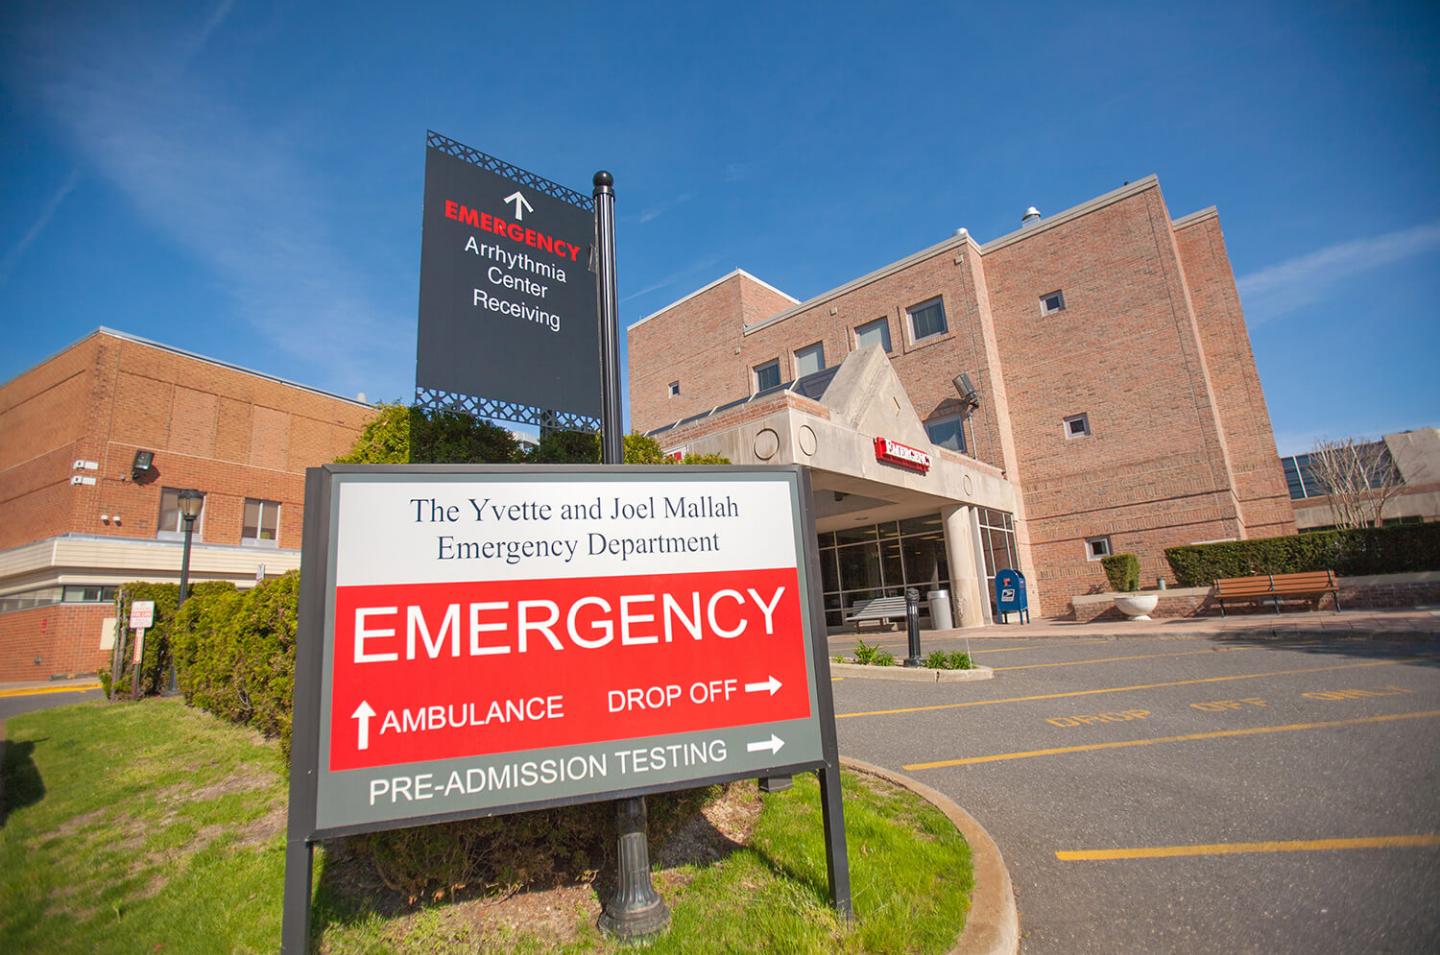 St. Francis Hospital Emergency Department entrance